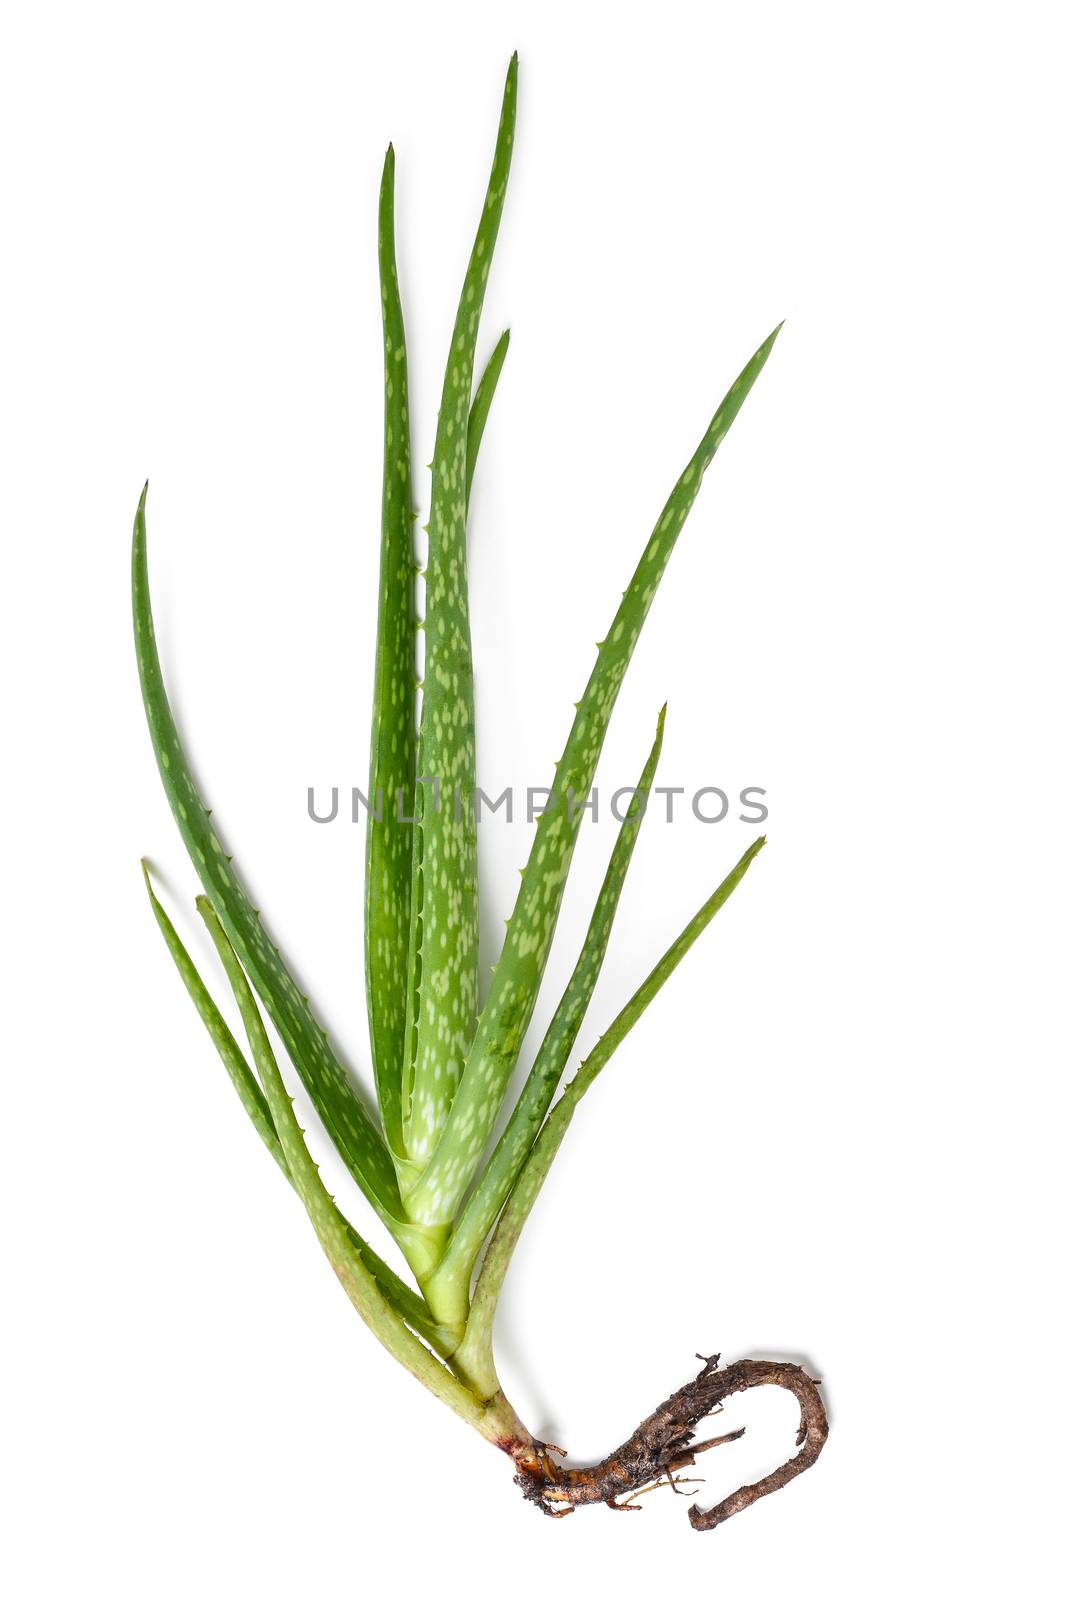 aloe vera plant by antpkr